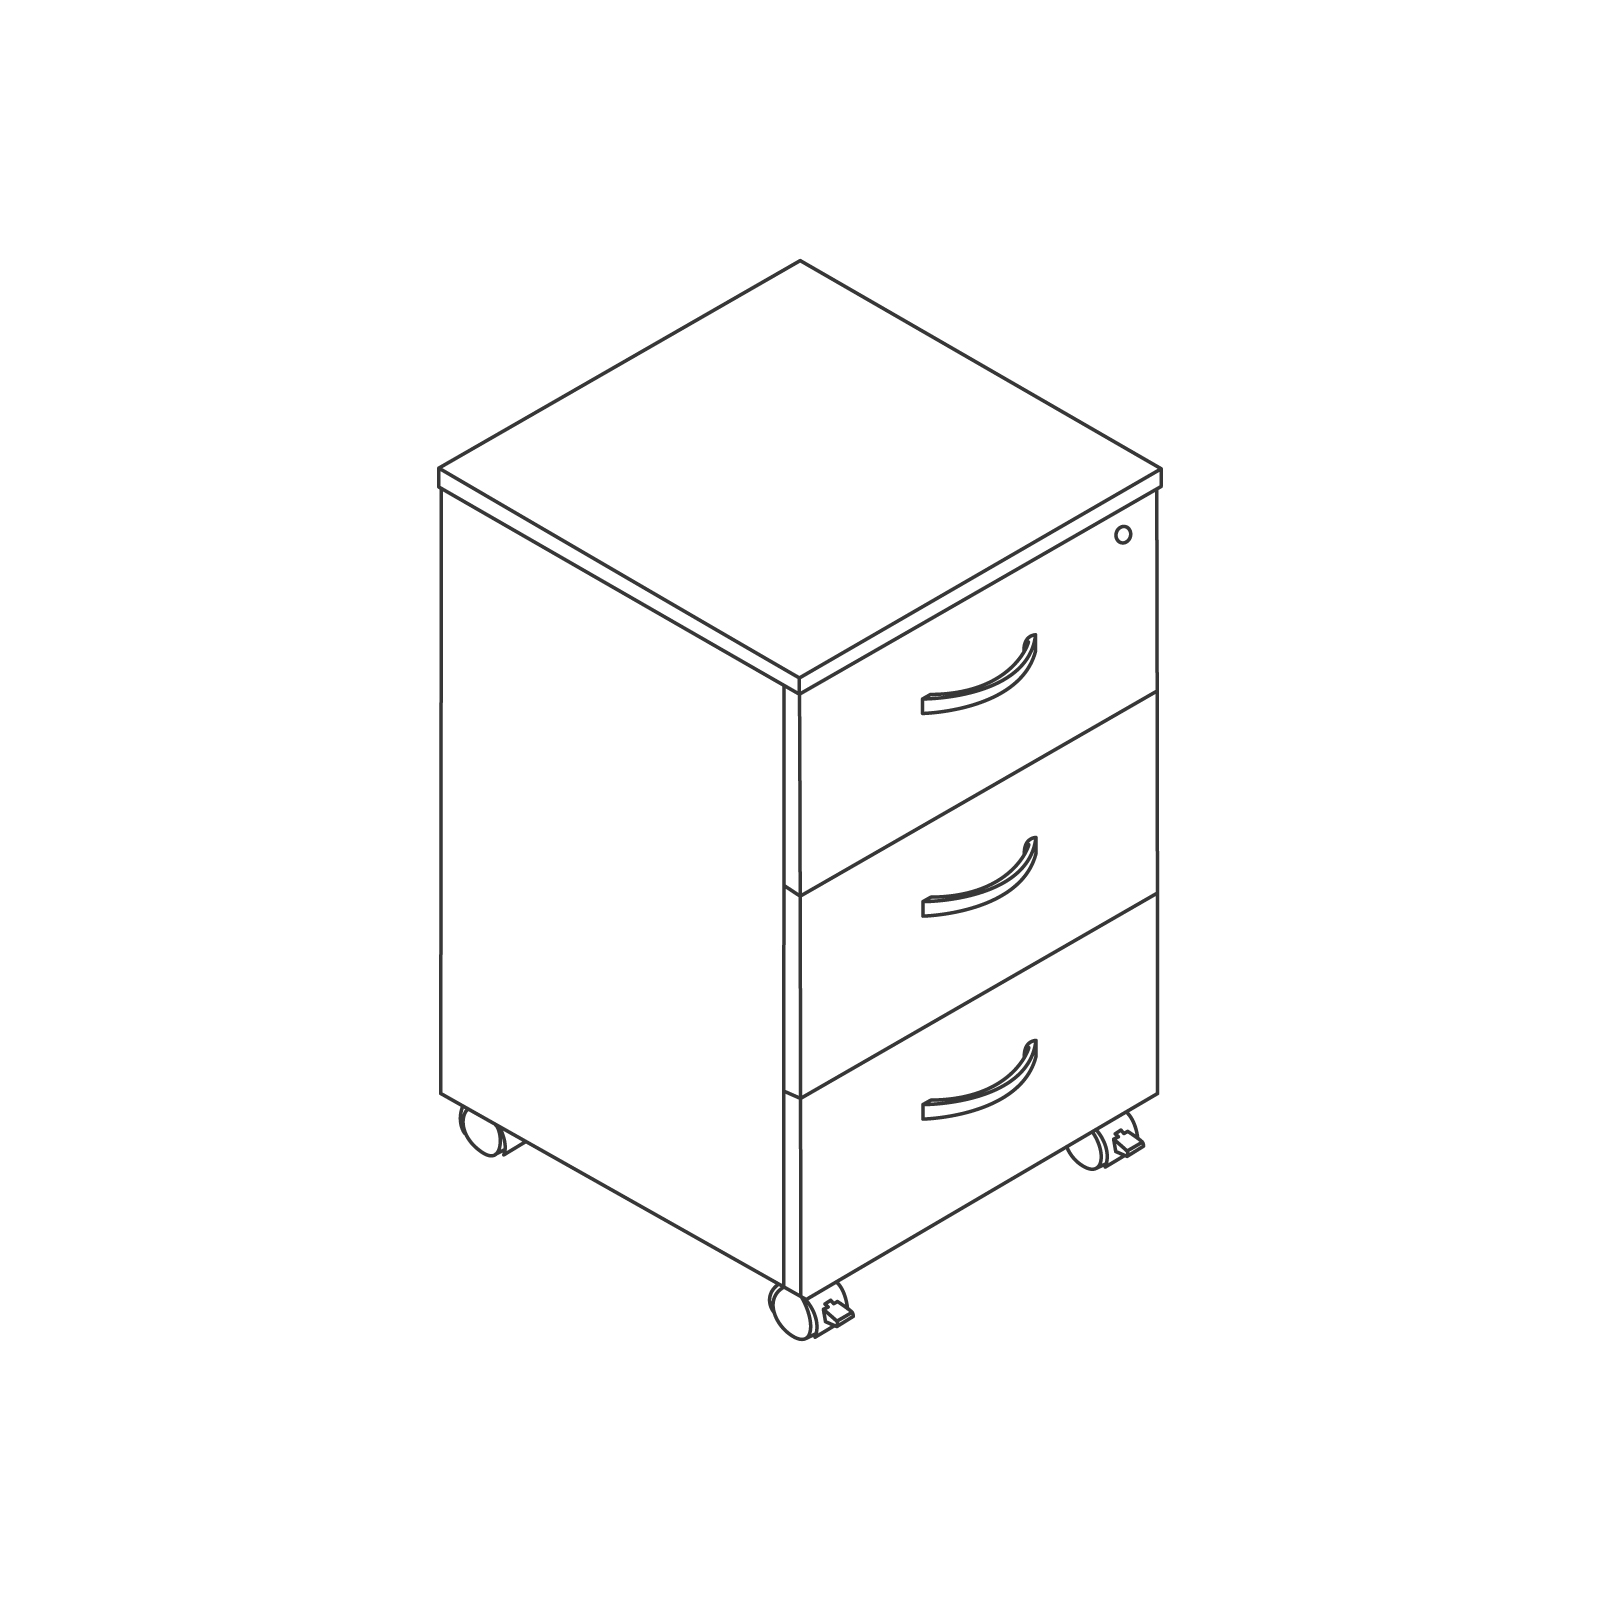 A line drawing - Nemschoff Bedside Cabinet–Casters